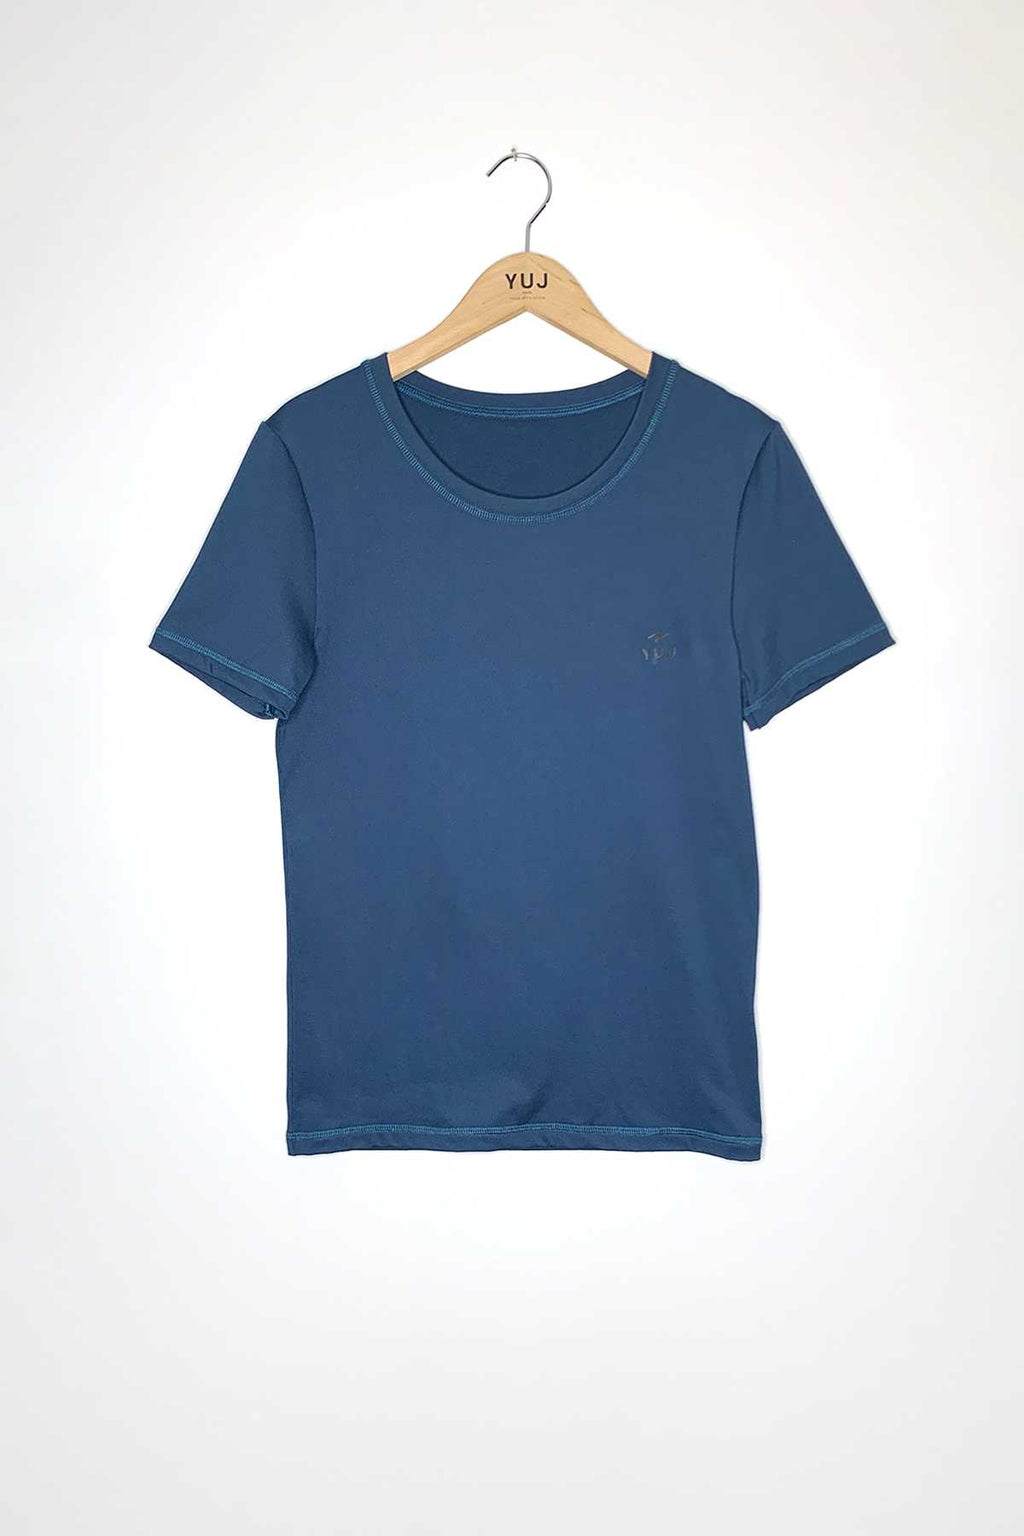 #346 - Camiseta termolactil para hombre YUJ X DAMART // Talla S YUJ - House of Mindfulness